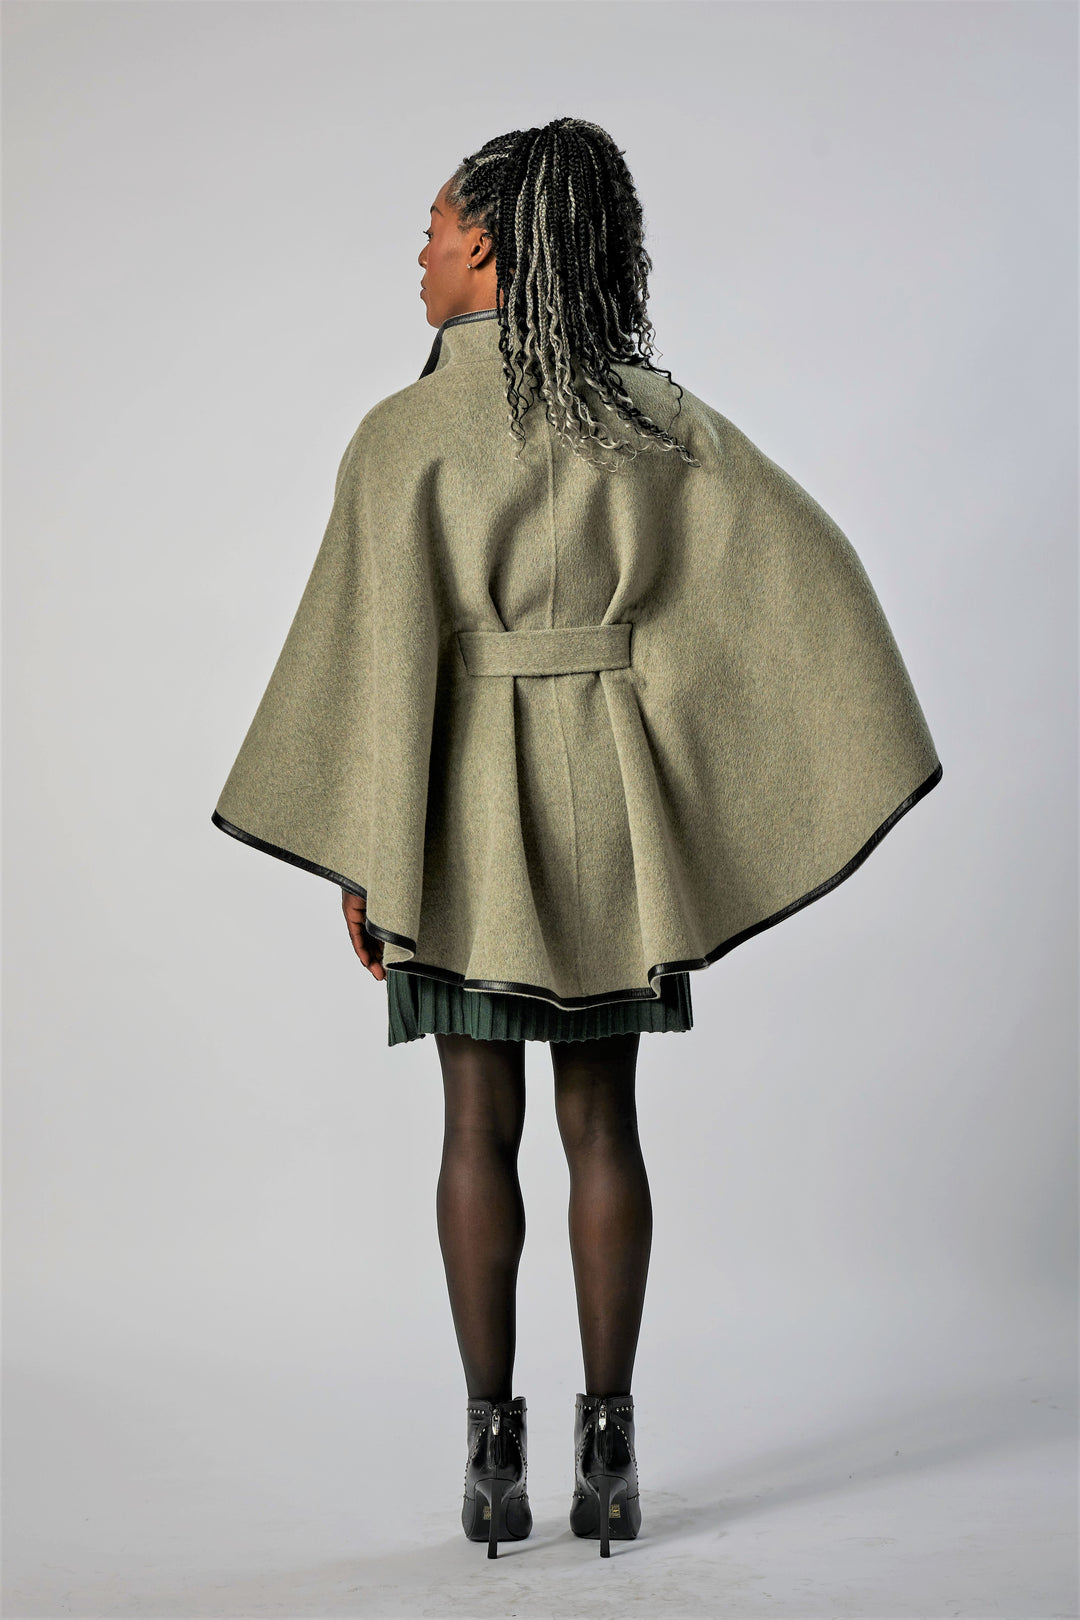 Pistachio Sage Italian 100% cashmere wool women cape coat swing classic elegant coat by Alesia Chaika